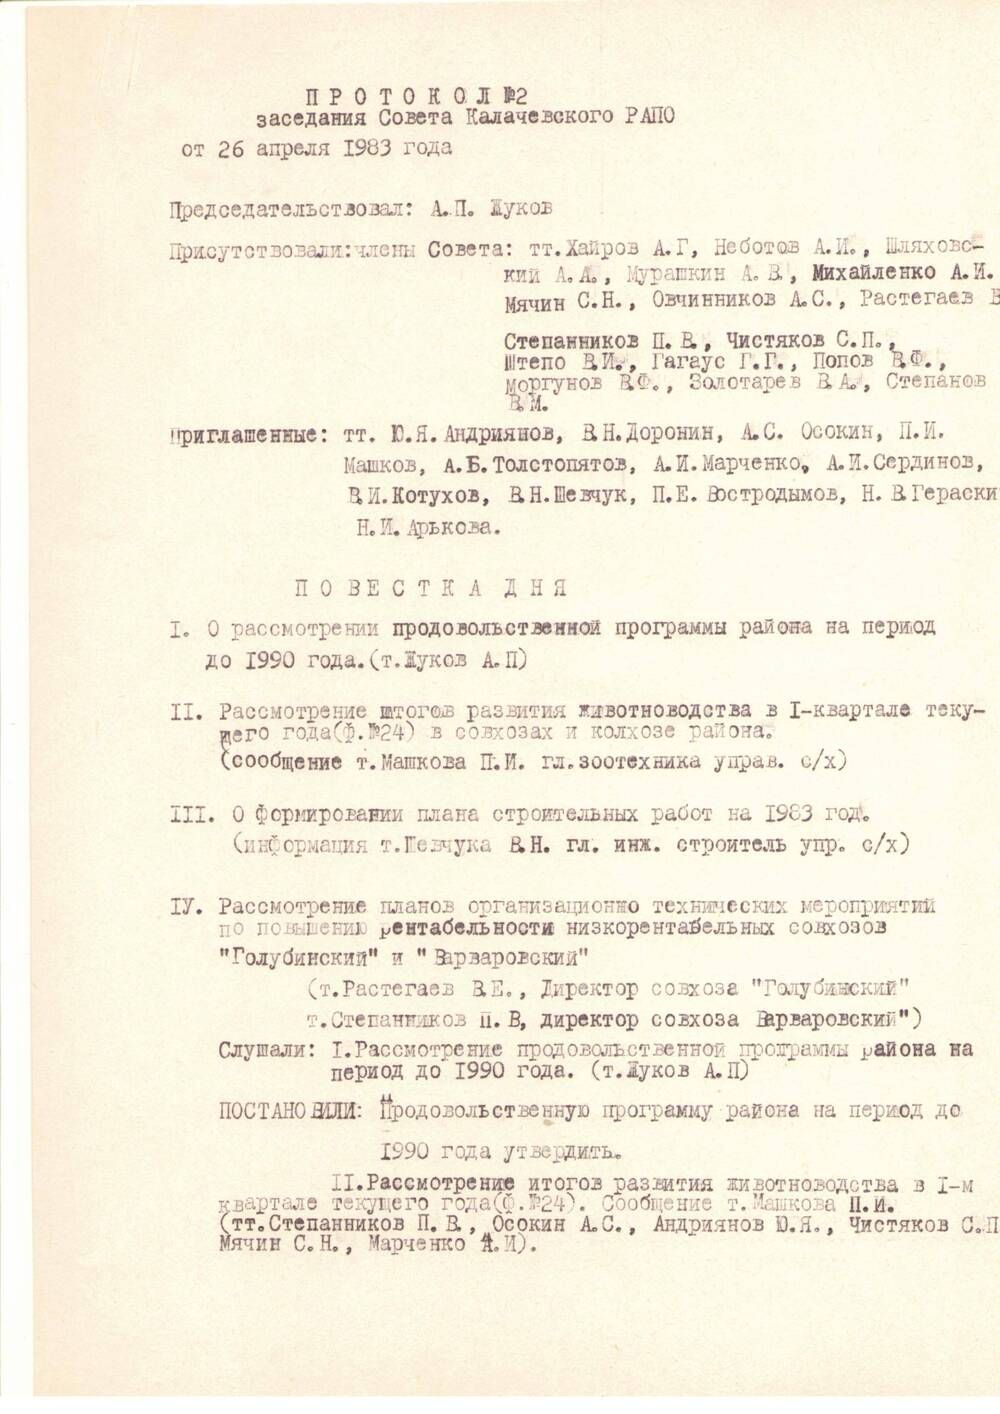 Протокол №2 заседания Совета РАПО от 26.04.1983г. Г. Калач-на-Дону.